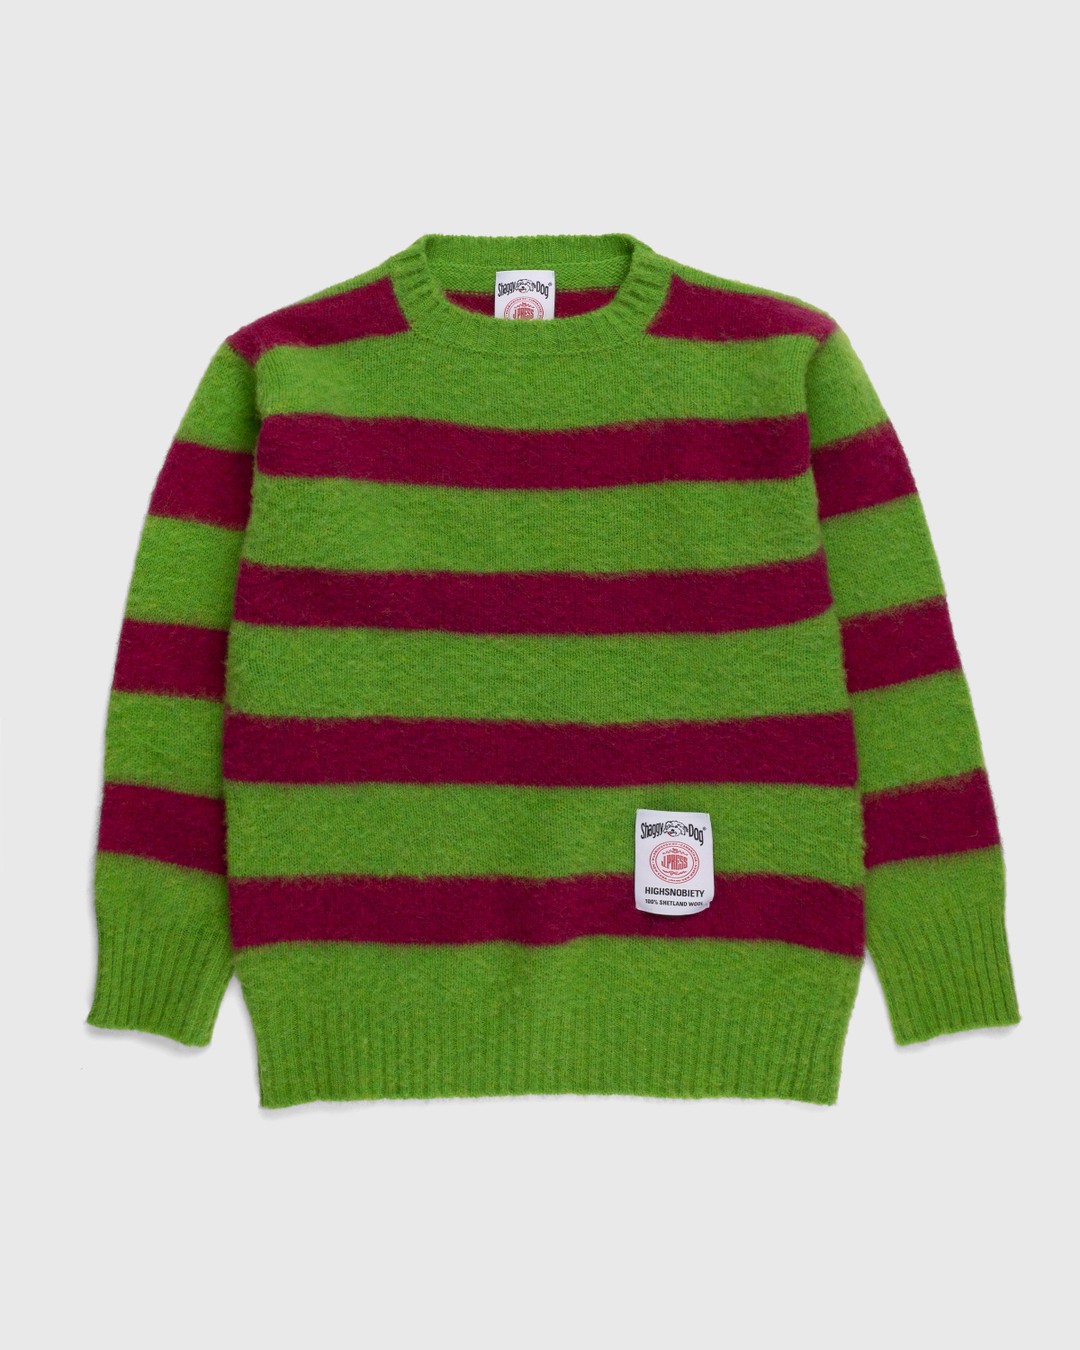 J. Press x Highsnobiety – Shaggy Dog Stripe Sweater Multi - Crewnecks - Multi - Image 1